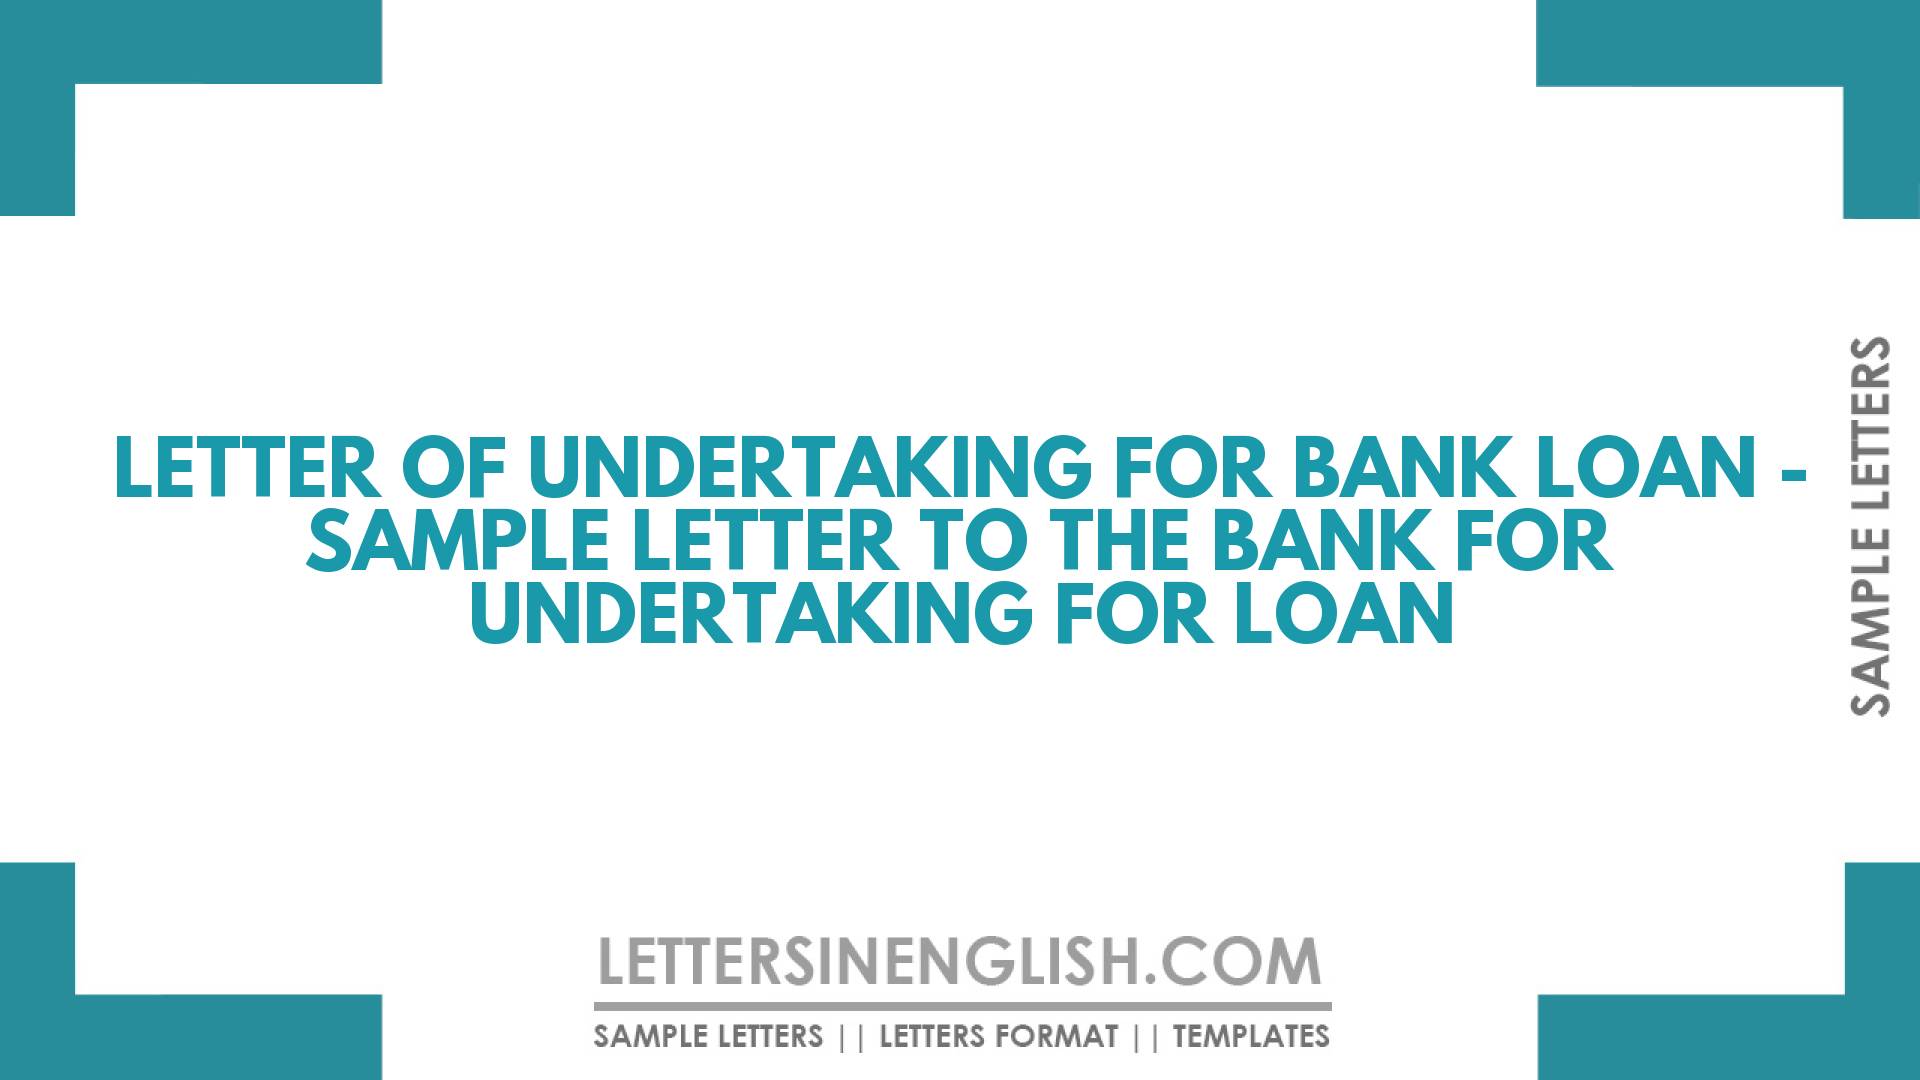 Letter of Undertaking for Bank Loan – Sample Letter to the Bank for Undertaking for Loan